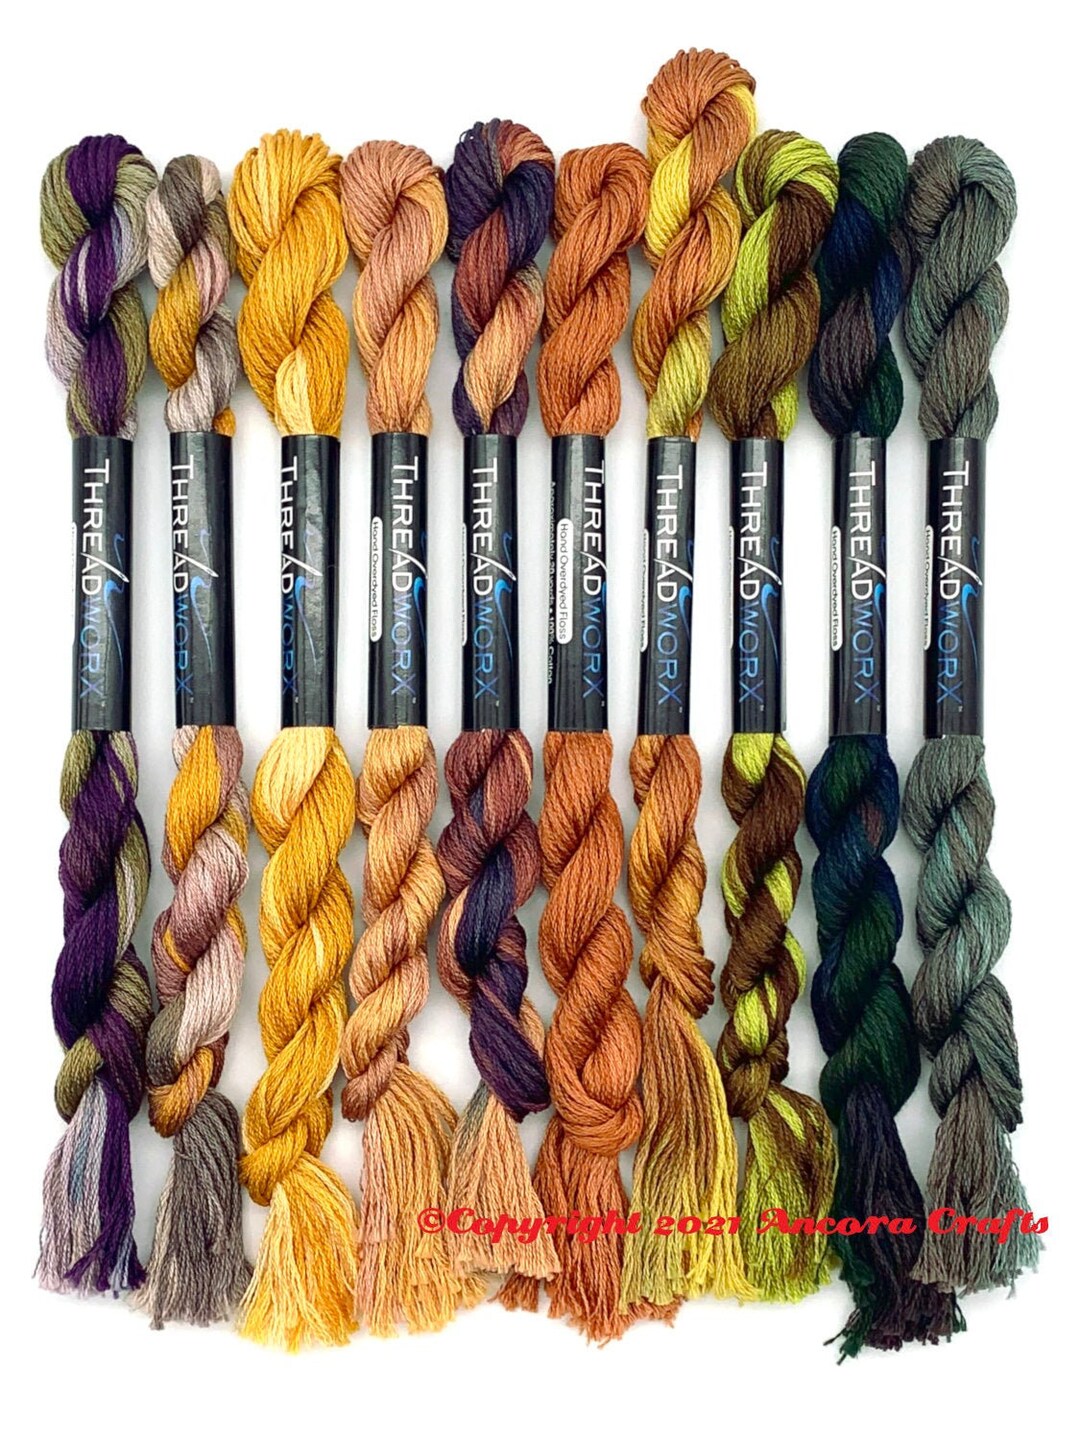 Threadworx 1154 Variegated Rainbow Embroidery Floss Bradley's